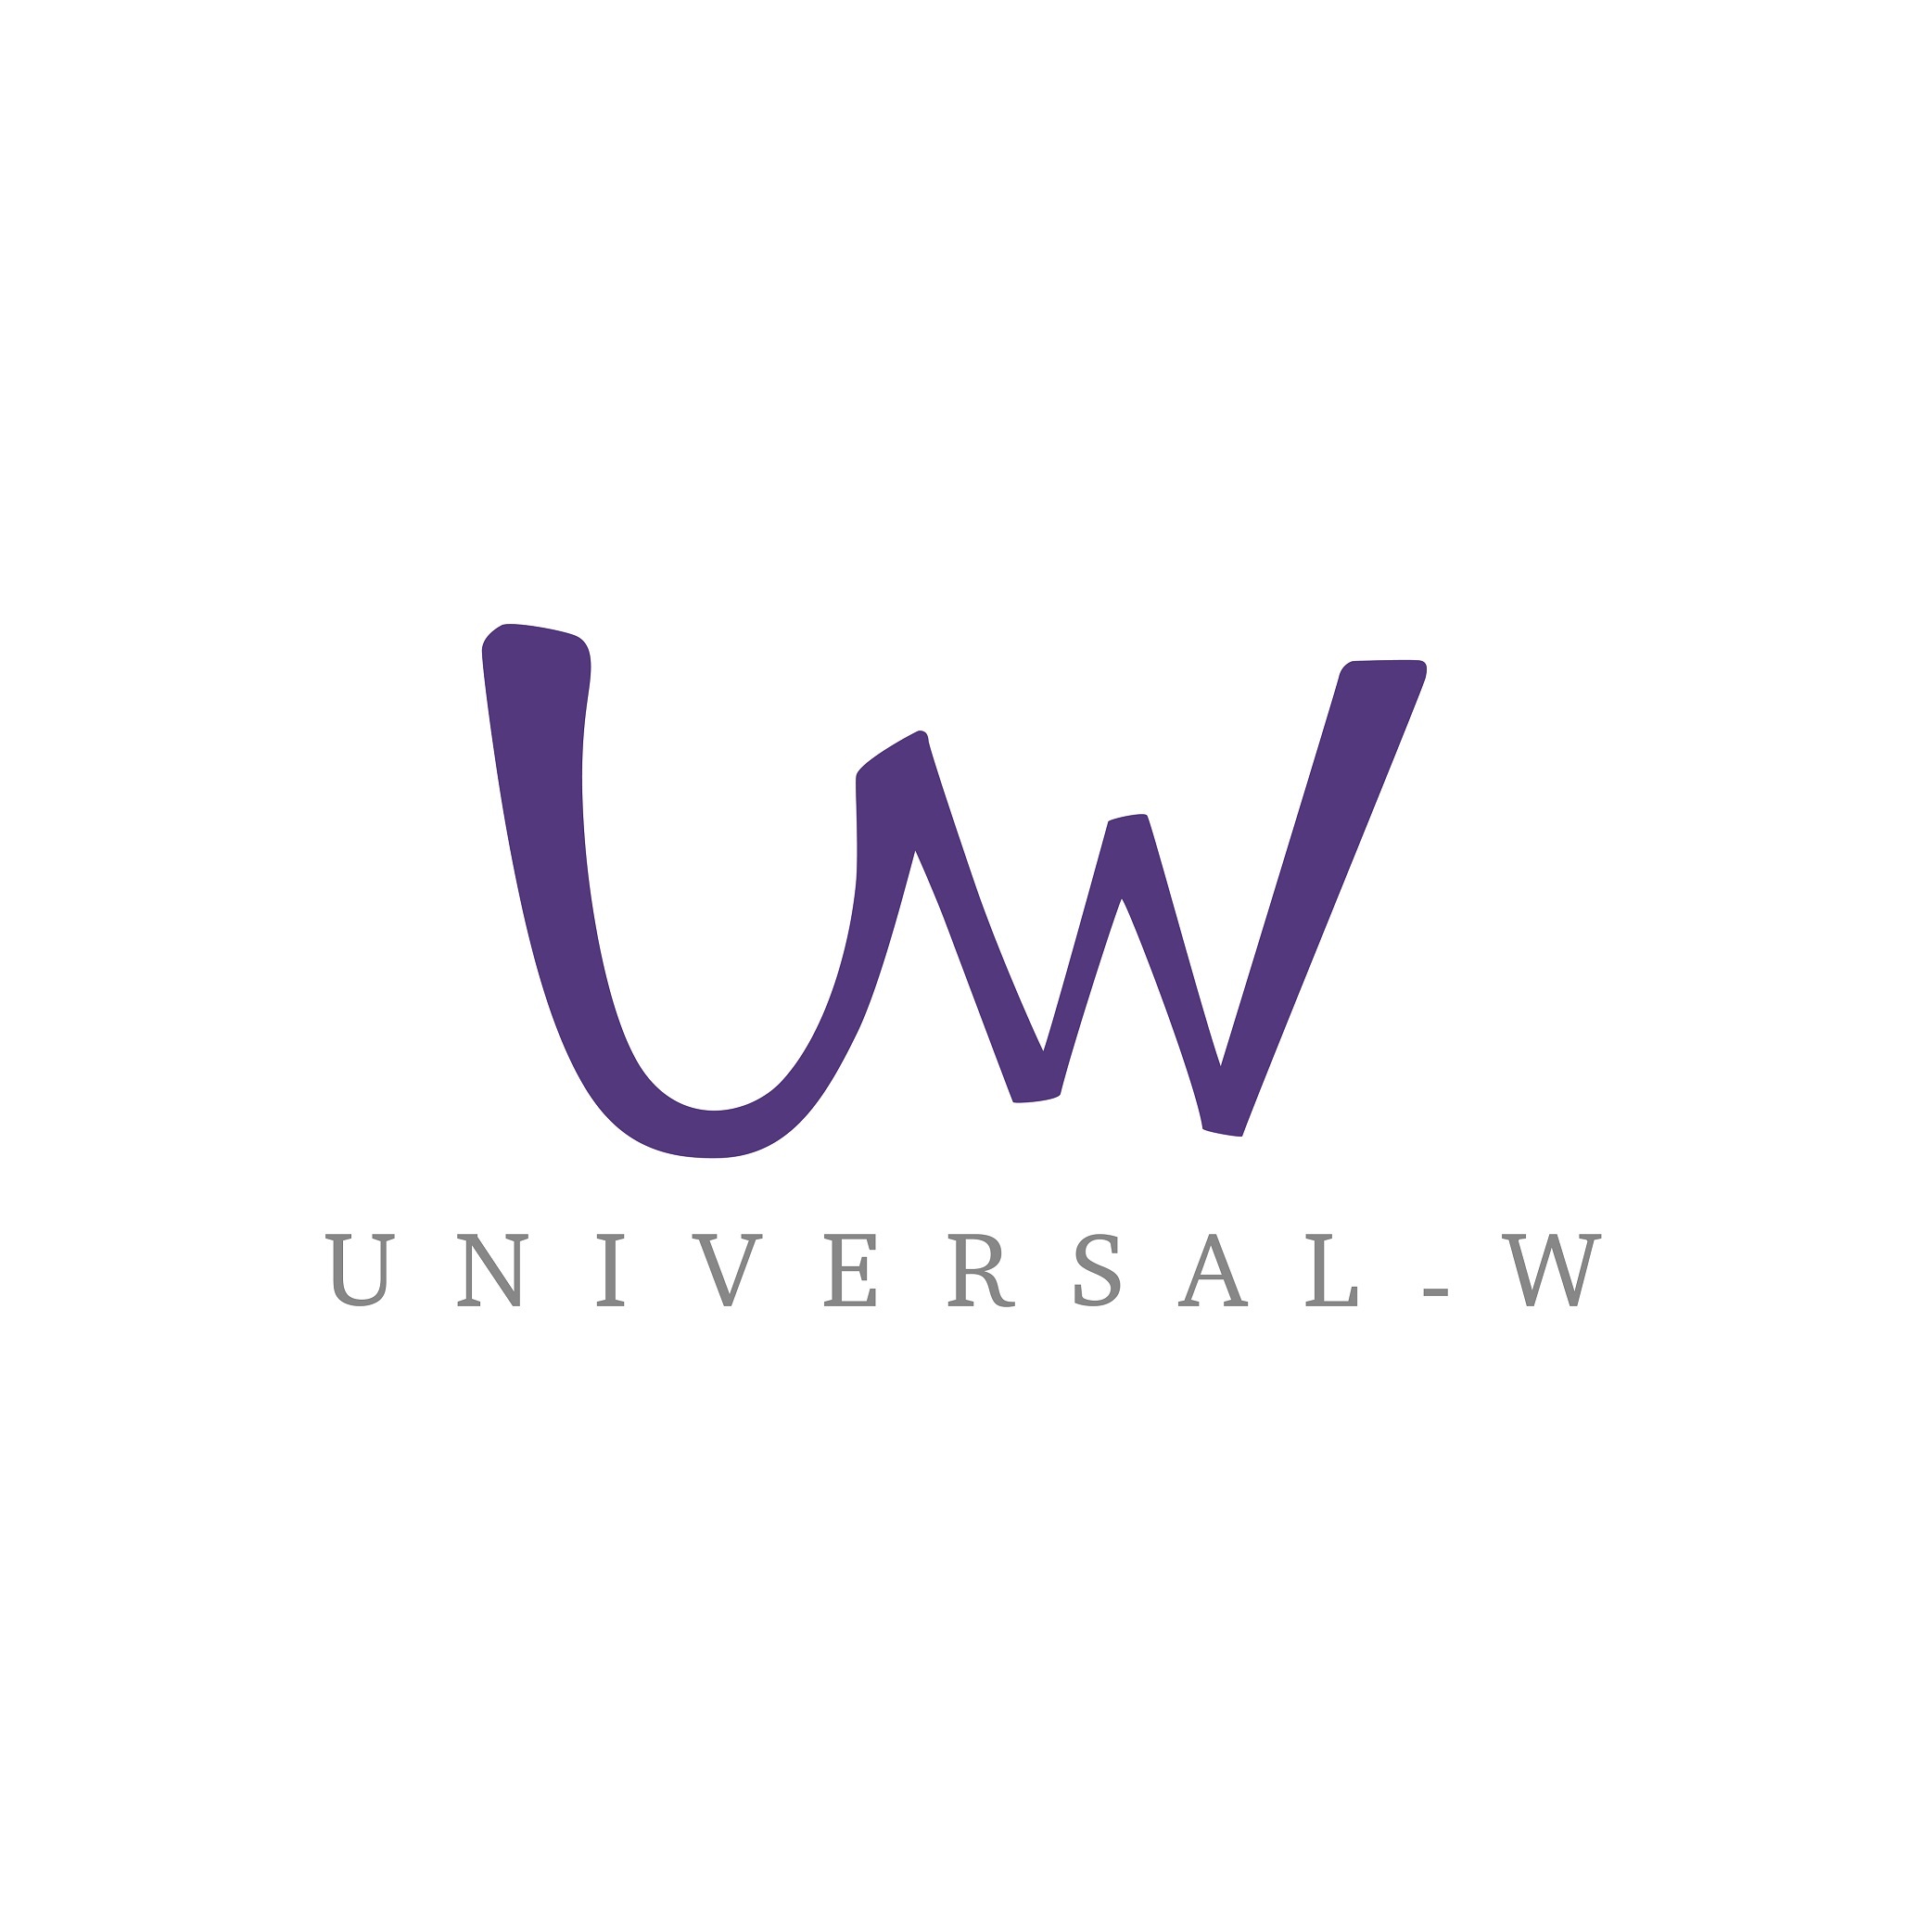 UNIVERSAL-W